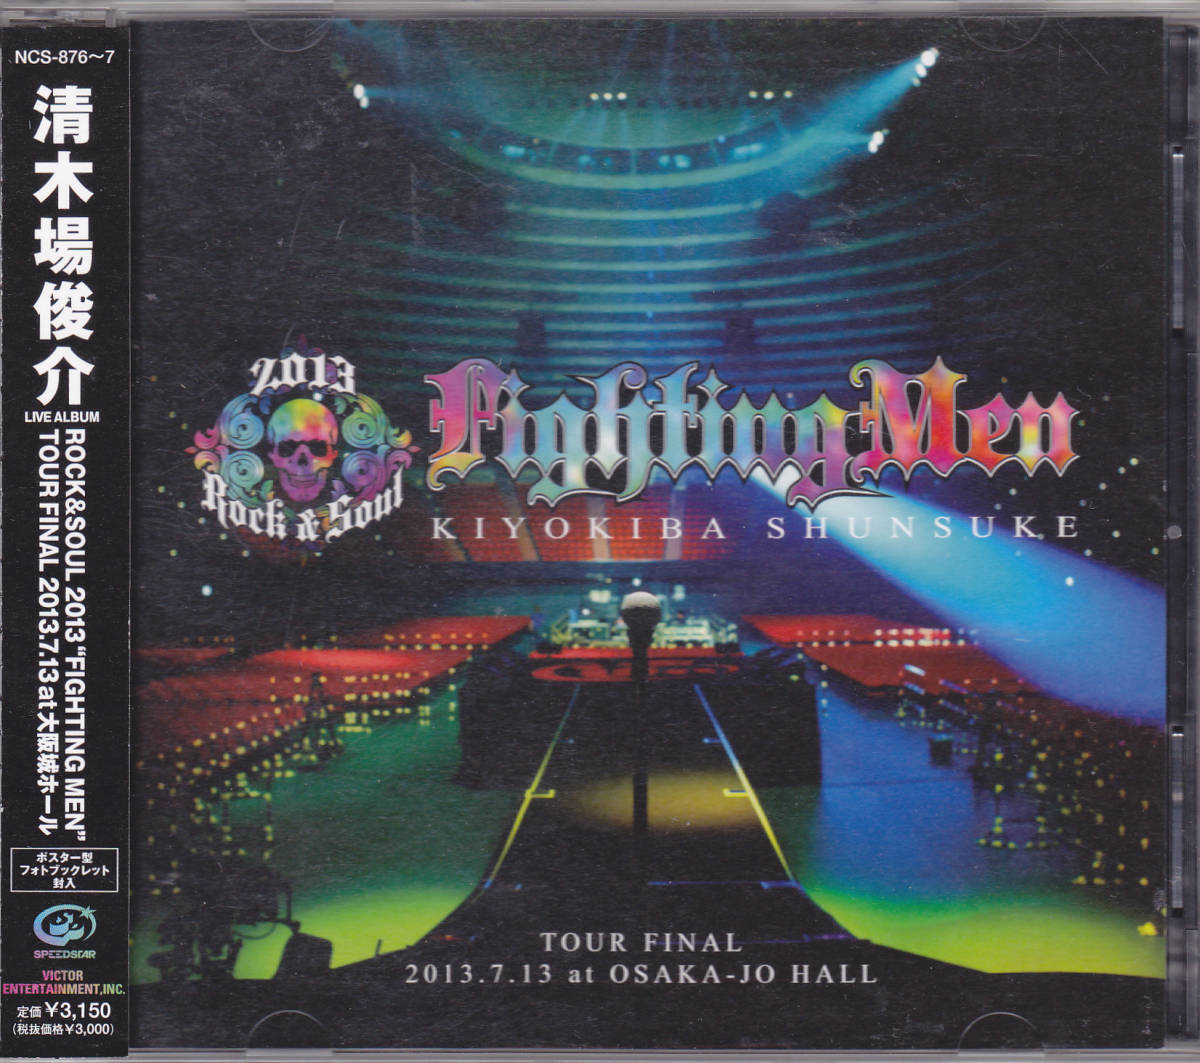 CD 清木場俊介 - ROCK＆SOUL 2013 “FIGHTING MEN” TOUR FINAL 2013.7.13 at 大阪城ホール - 帯付き NCS-876～7_画像1